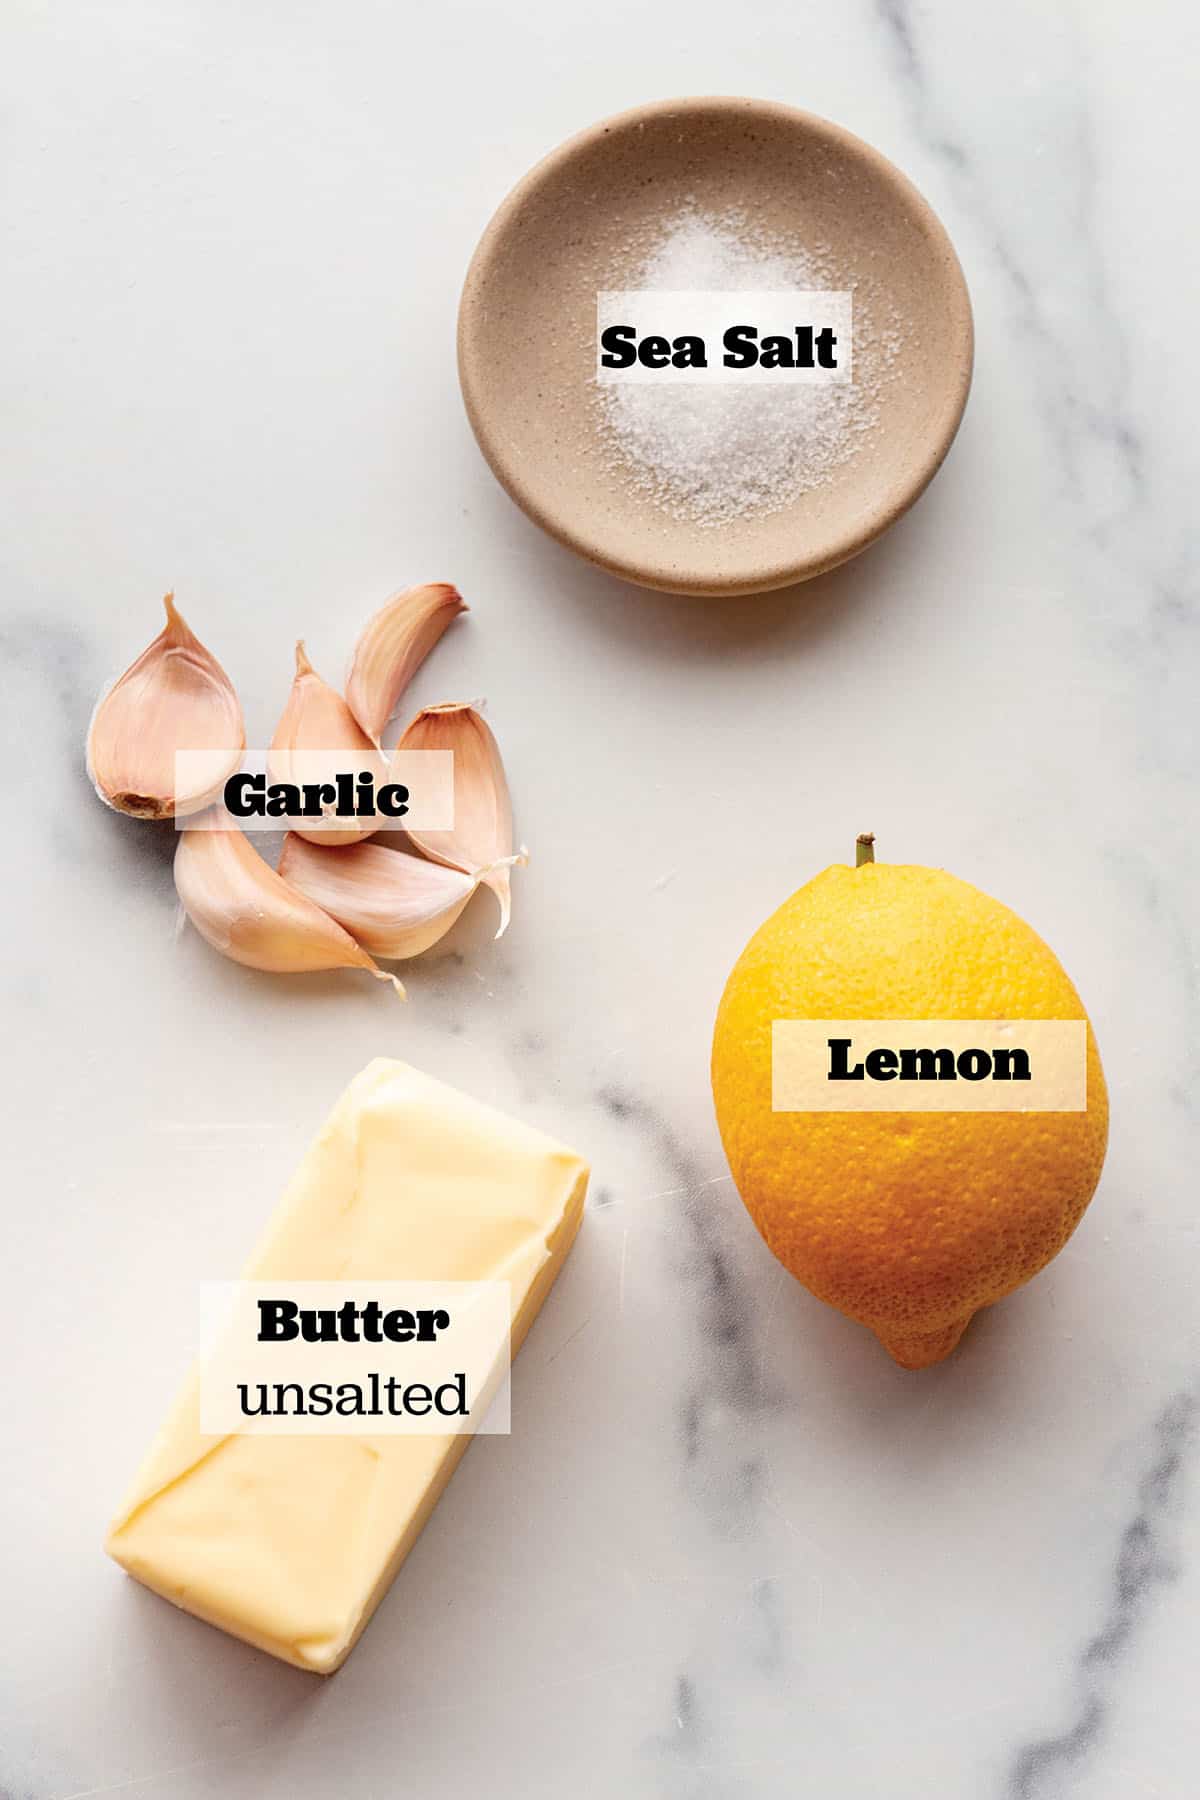 Stick of butter, fresh lemon, sea salt, and garlic cloves.